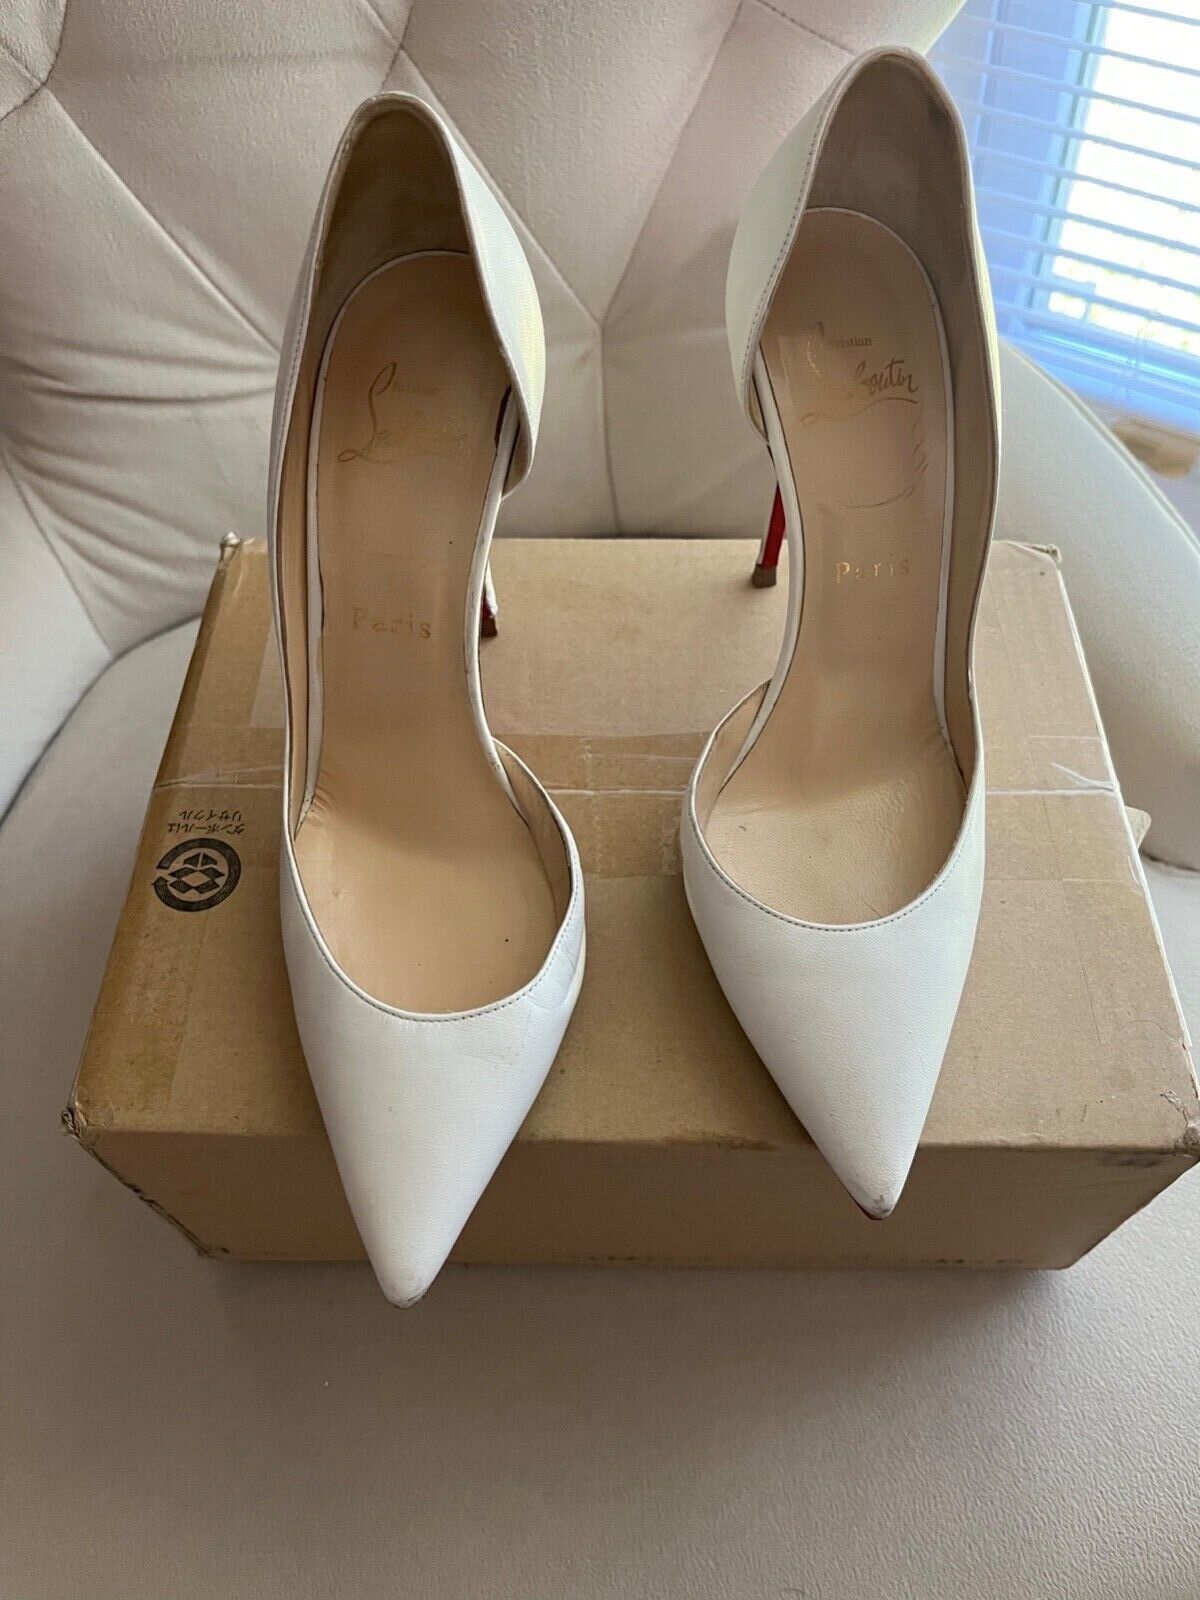 CHRISTIAN LOUBOUTIN IRIZA 100 white leather pointed toe heels shoes size 37